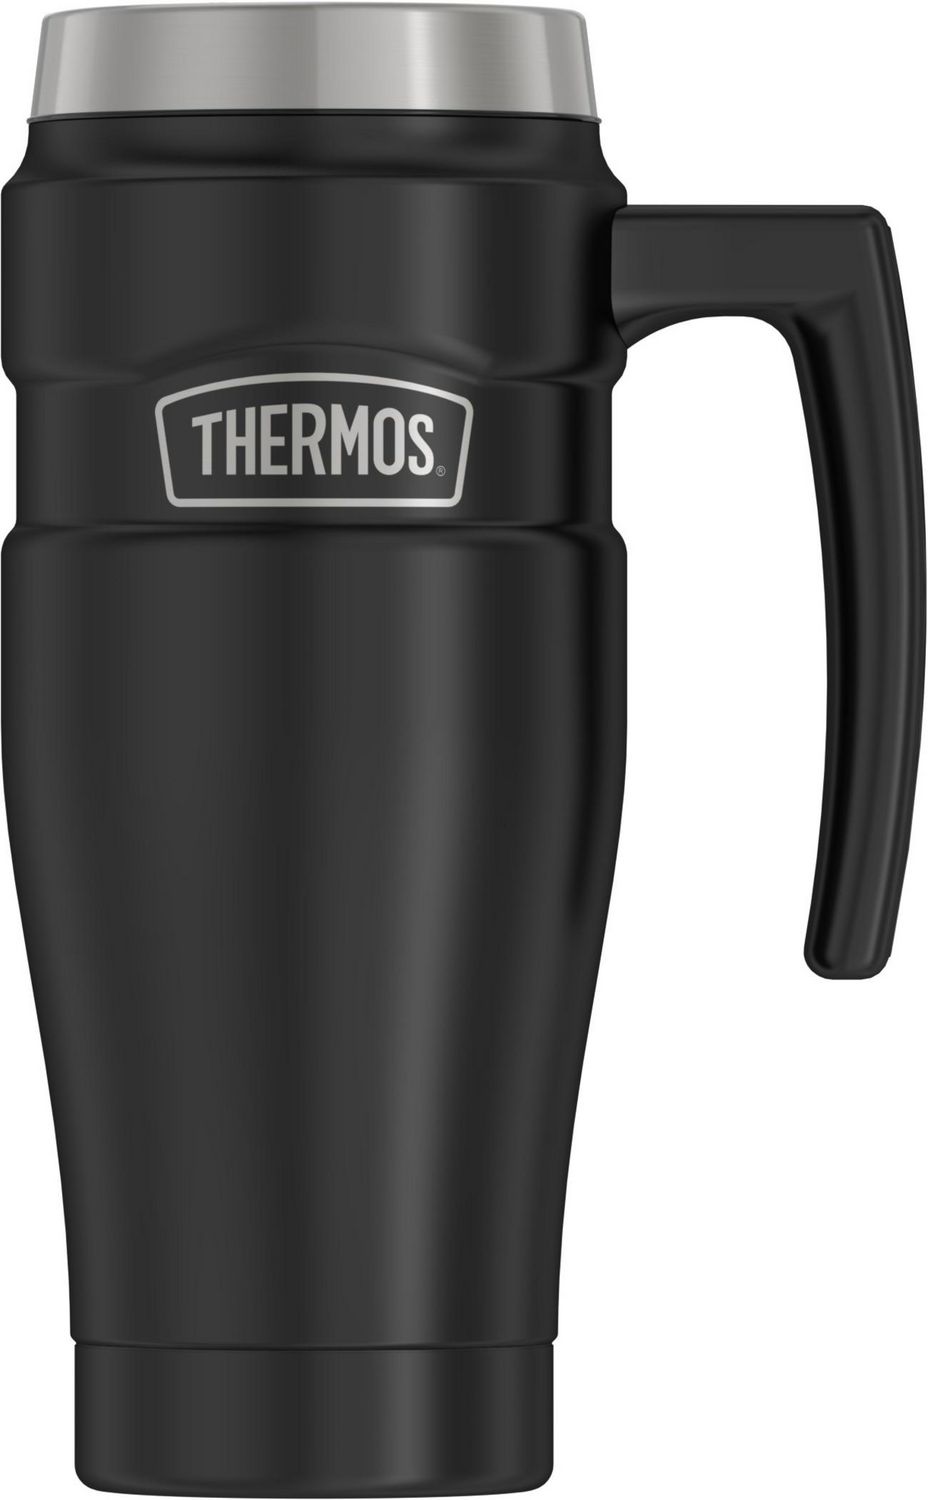 Thermos Stainless King Vacuum Insulated 16 Oz Travel Mug, Matte Black 